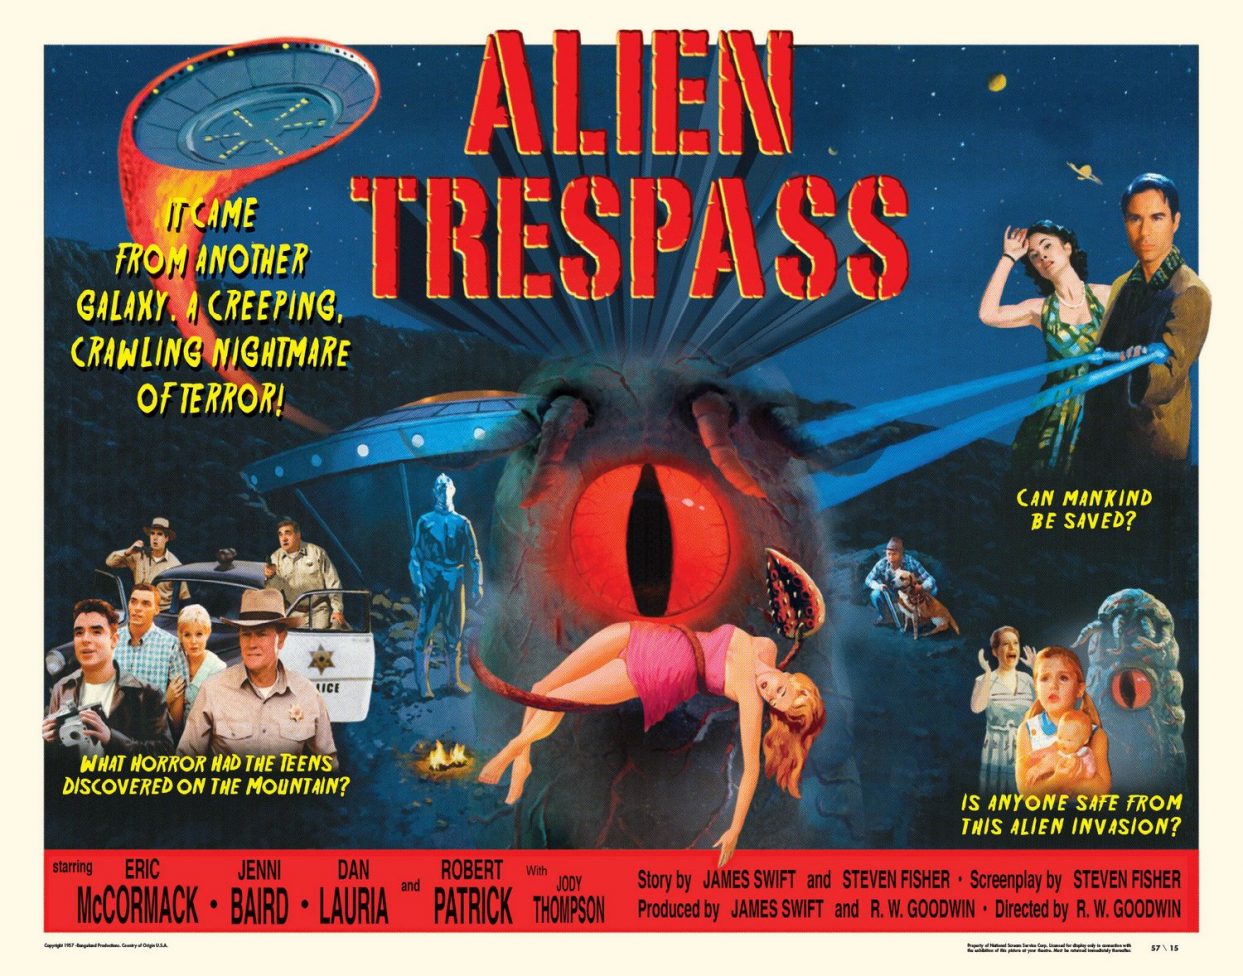 Alien Trespass (2009)